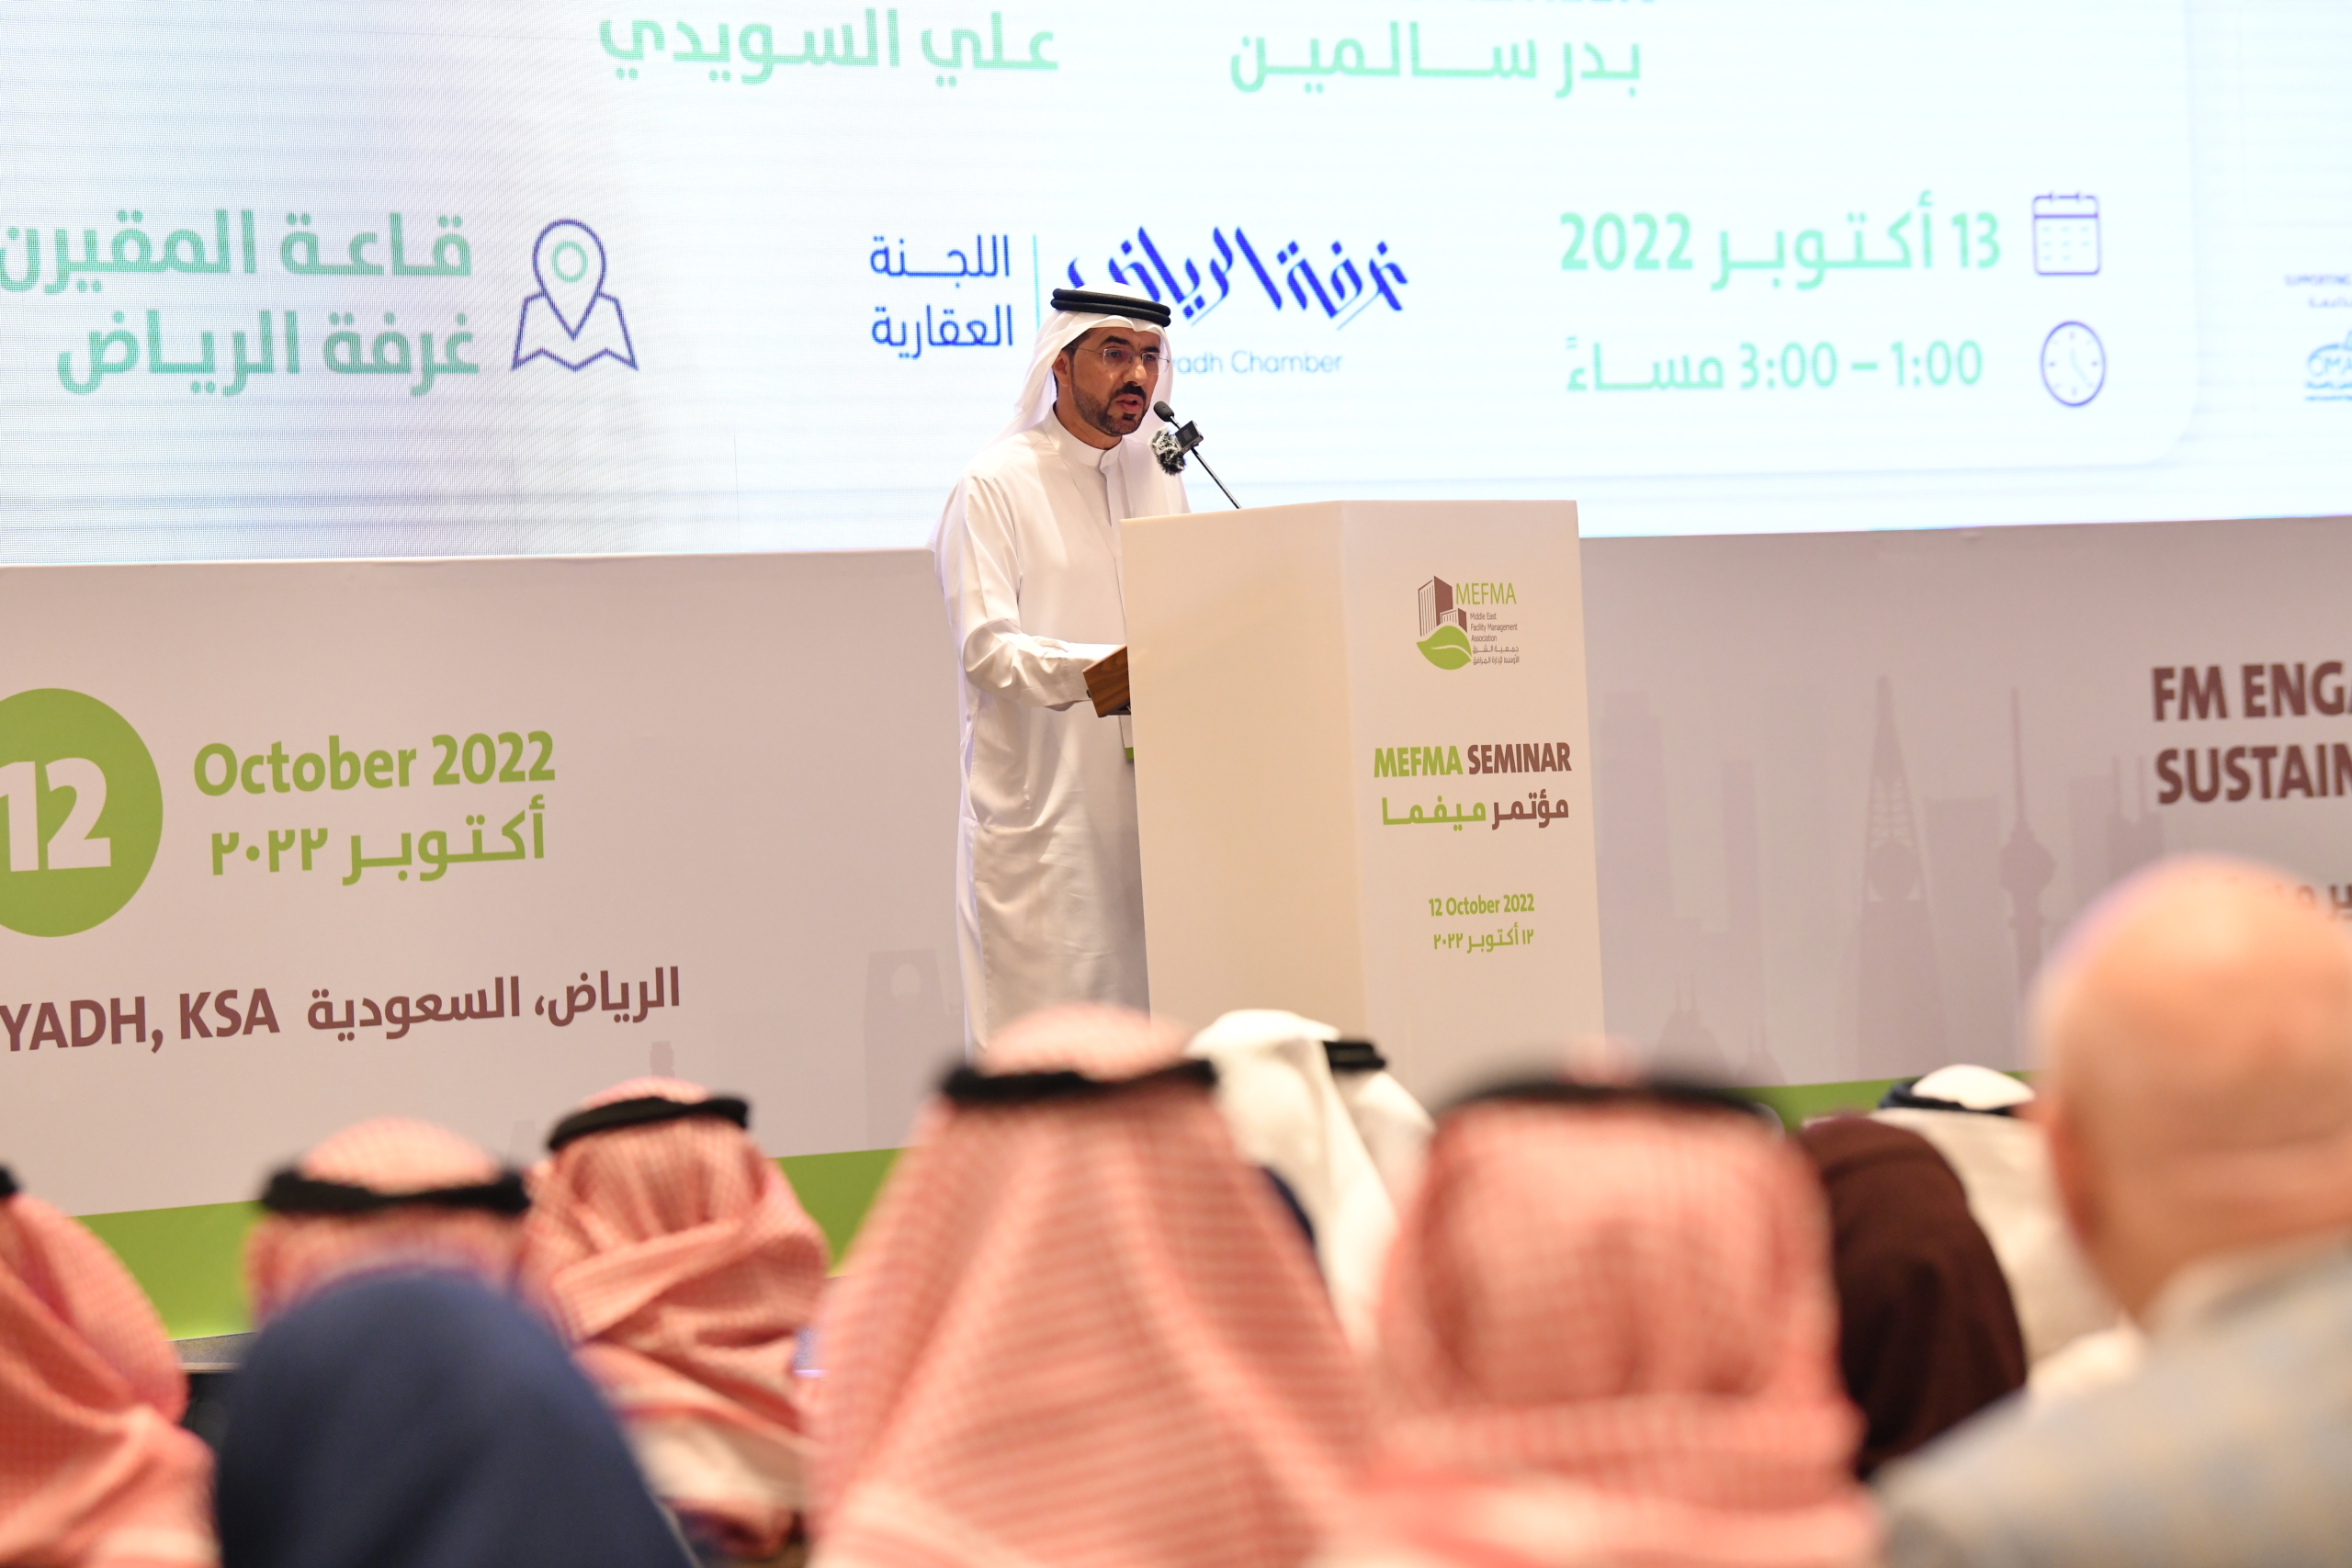 MEFMA seminar in Saudi Arabia focuses on innovative technologies for sustainable FM operations